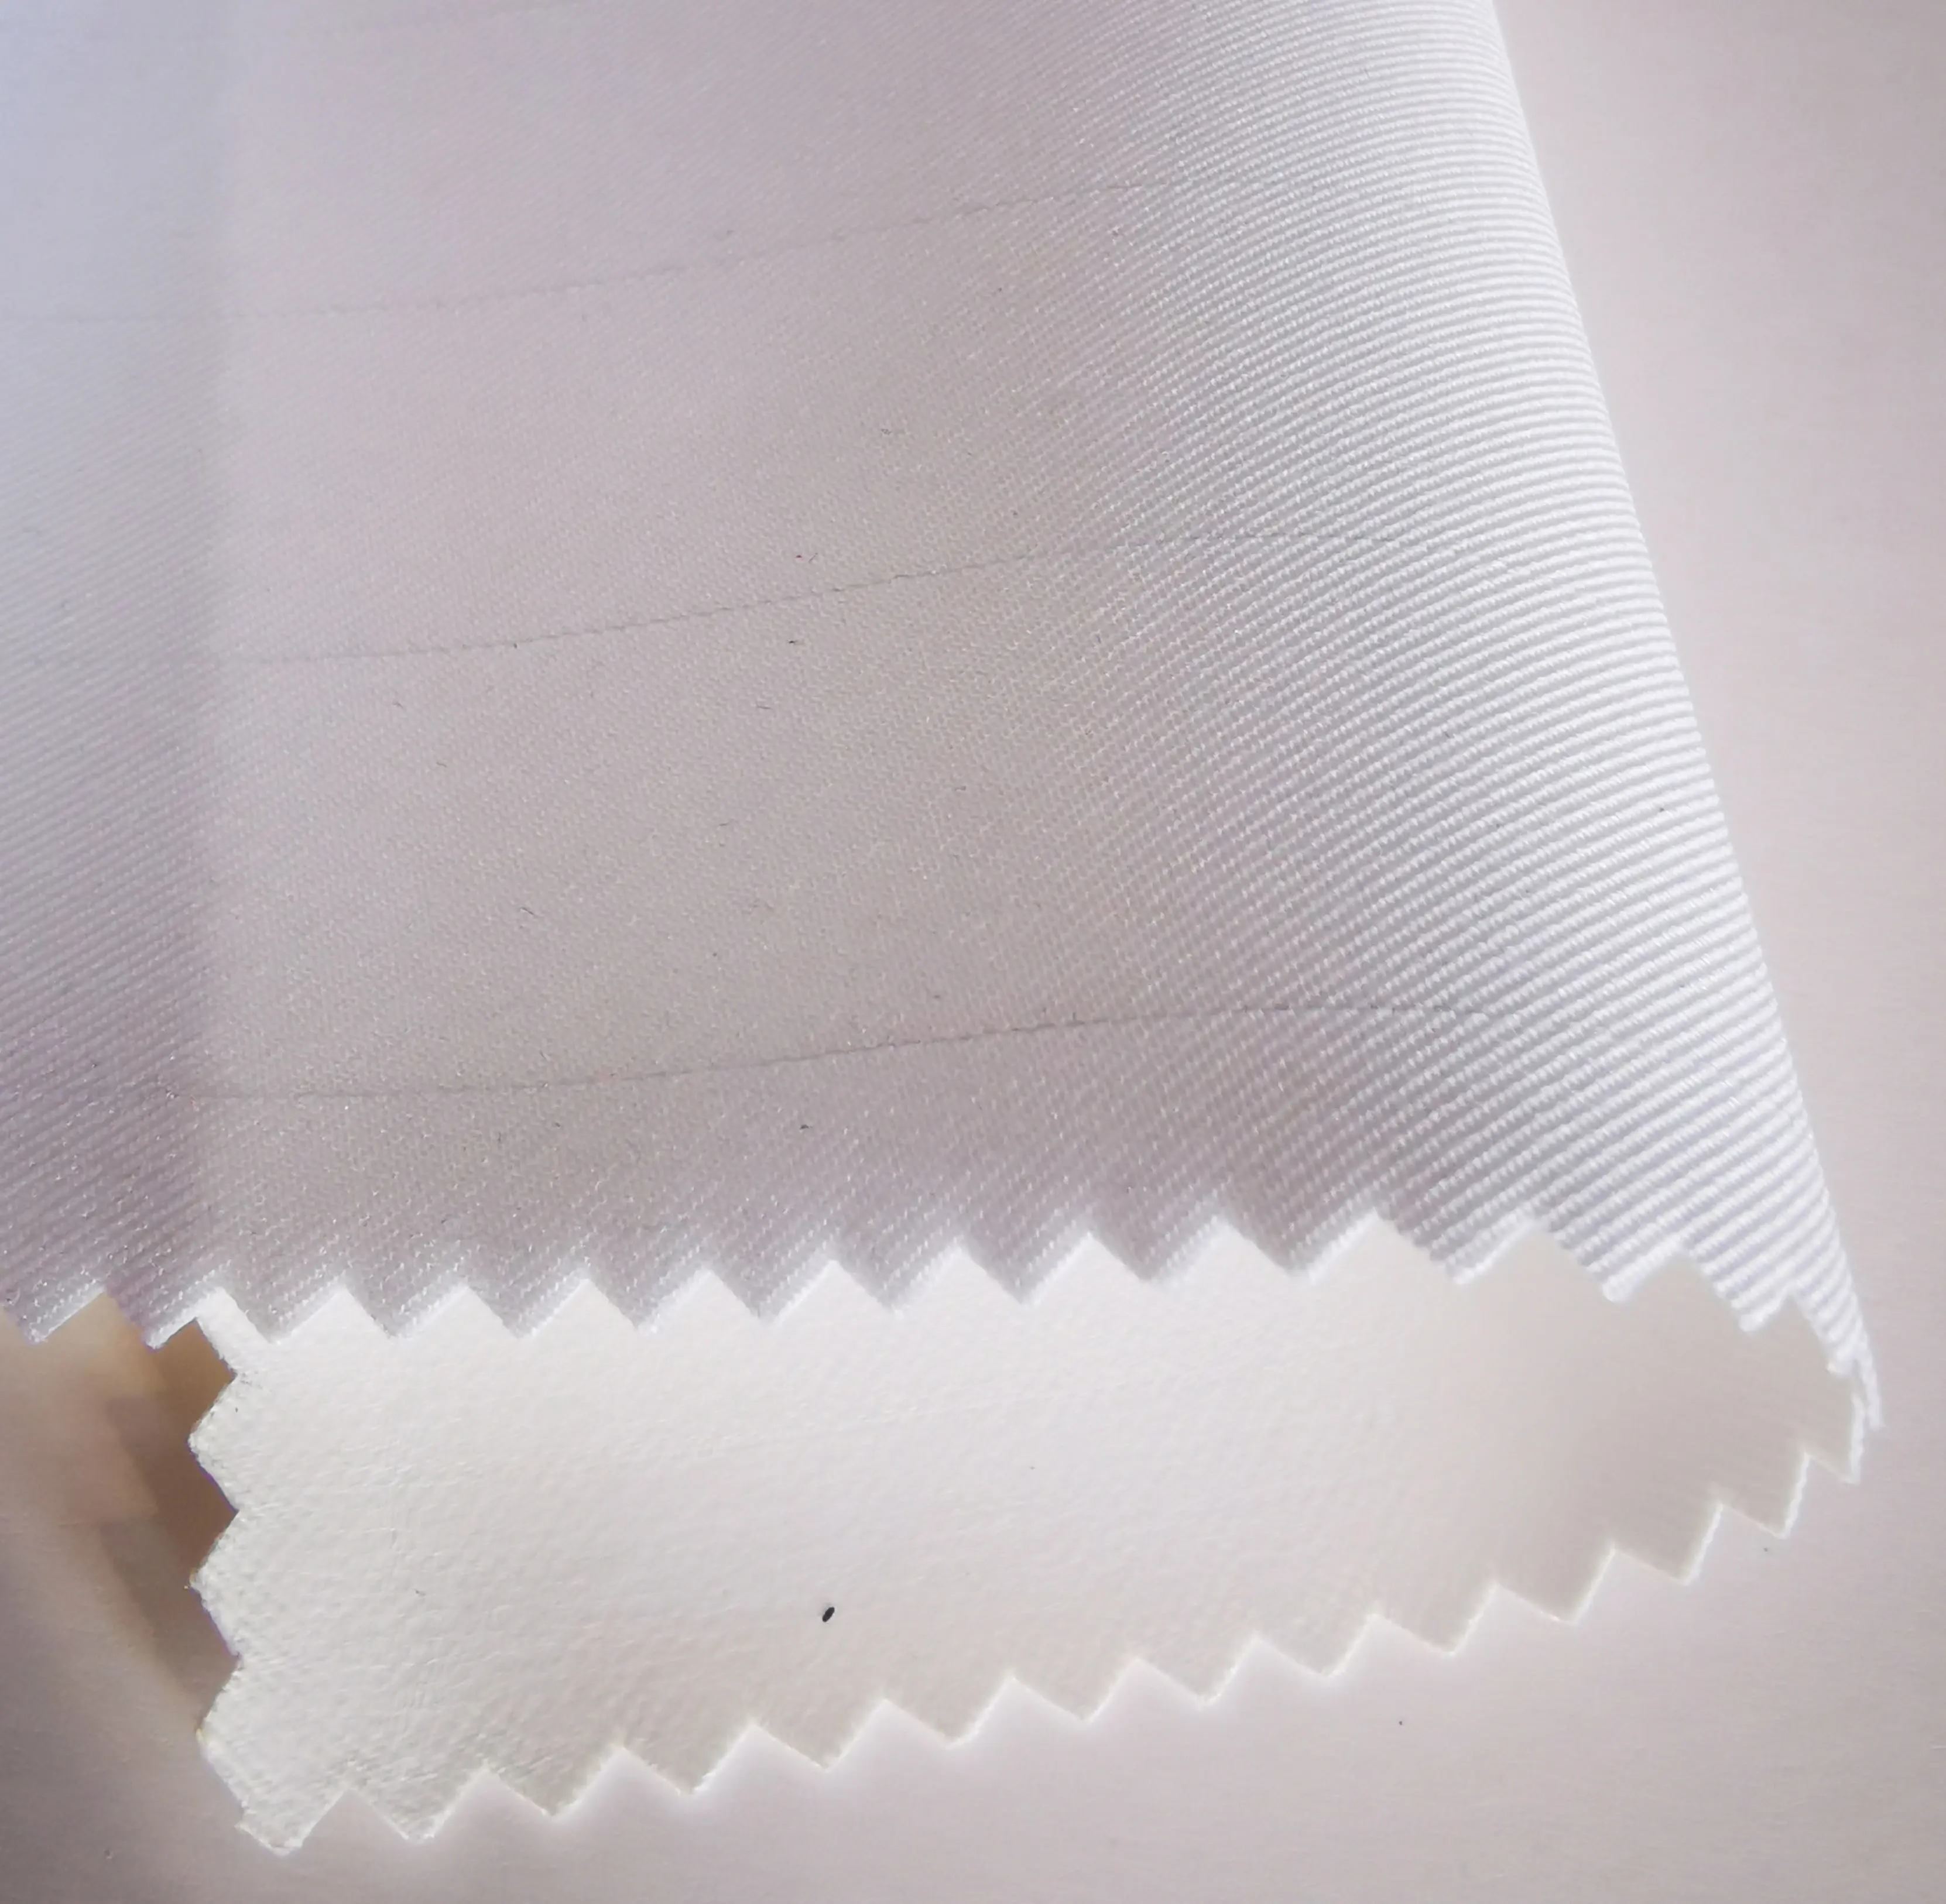 Laminated Fabric DENTIK Waterproof PTFE Membrane Laminated Fabric Workwear Anti-Static Fabric For Safety Apparel